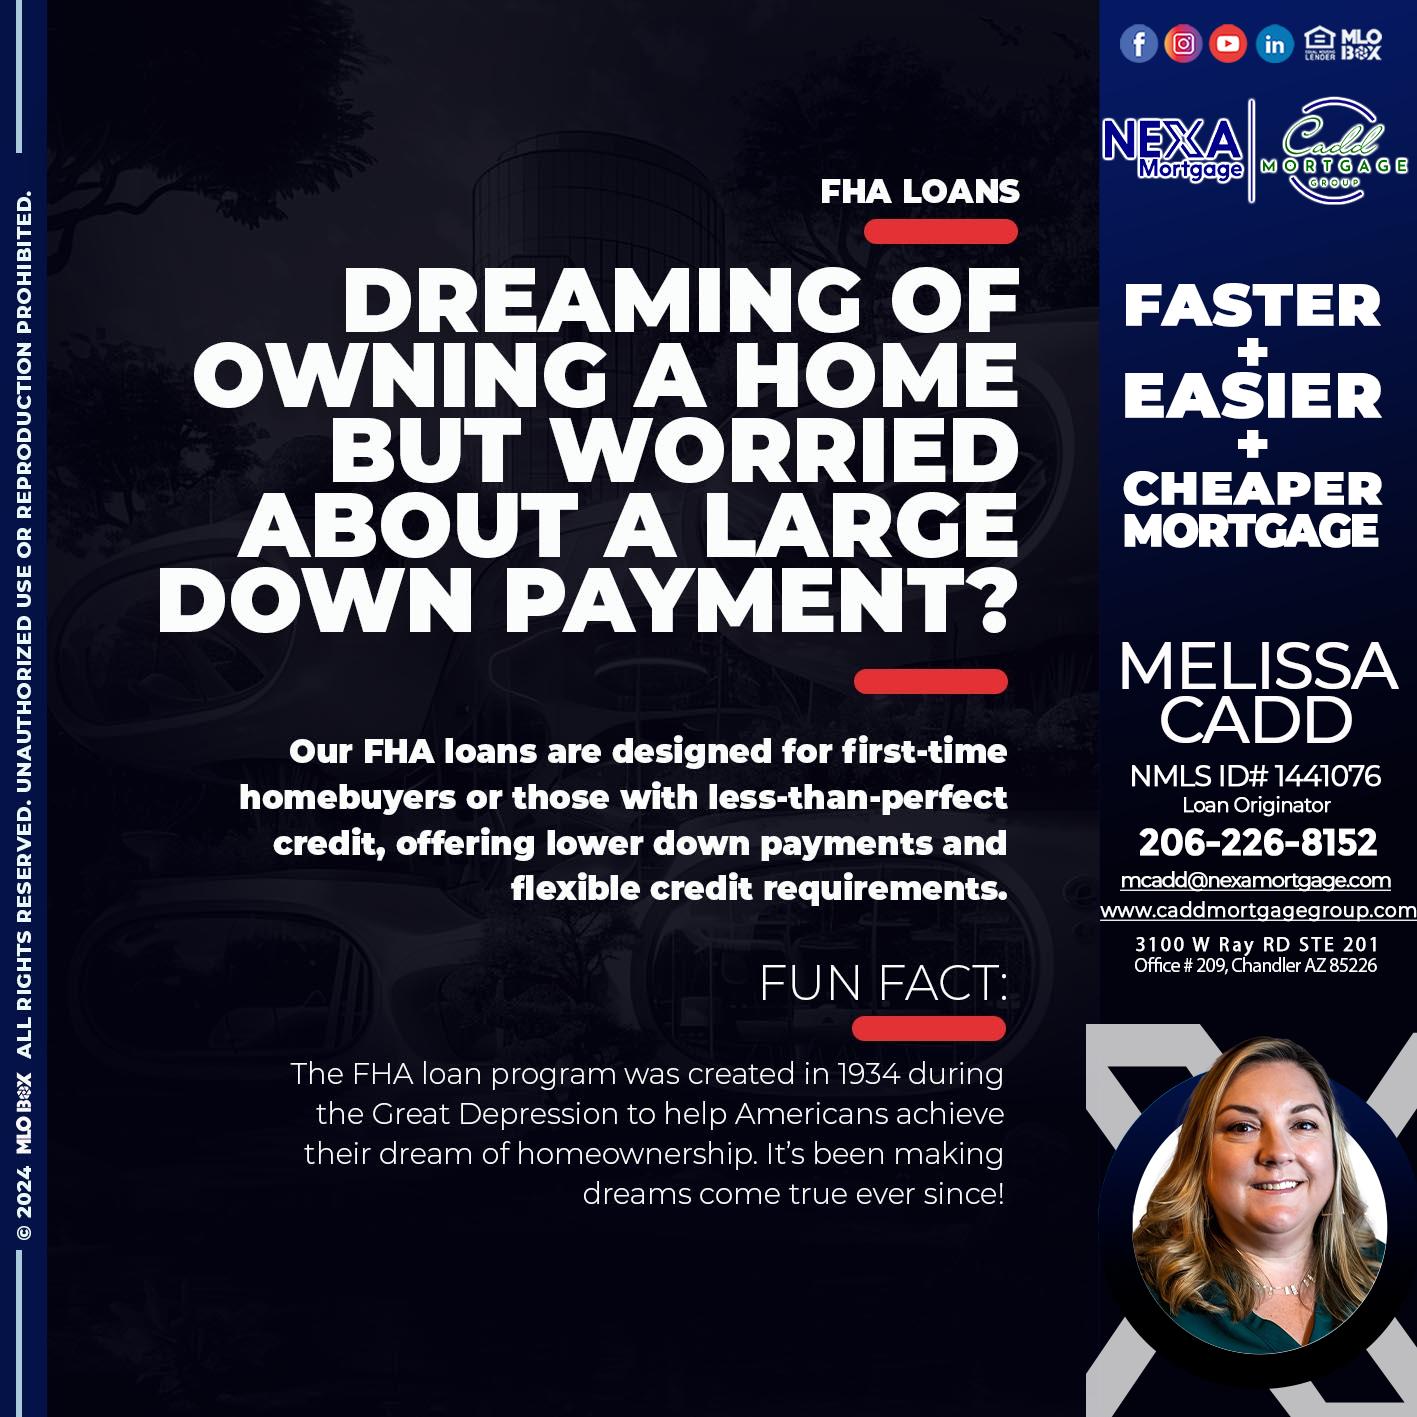 FHA LOANS - Melissa Cadd -Loan Originator